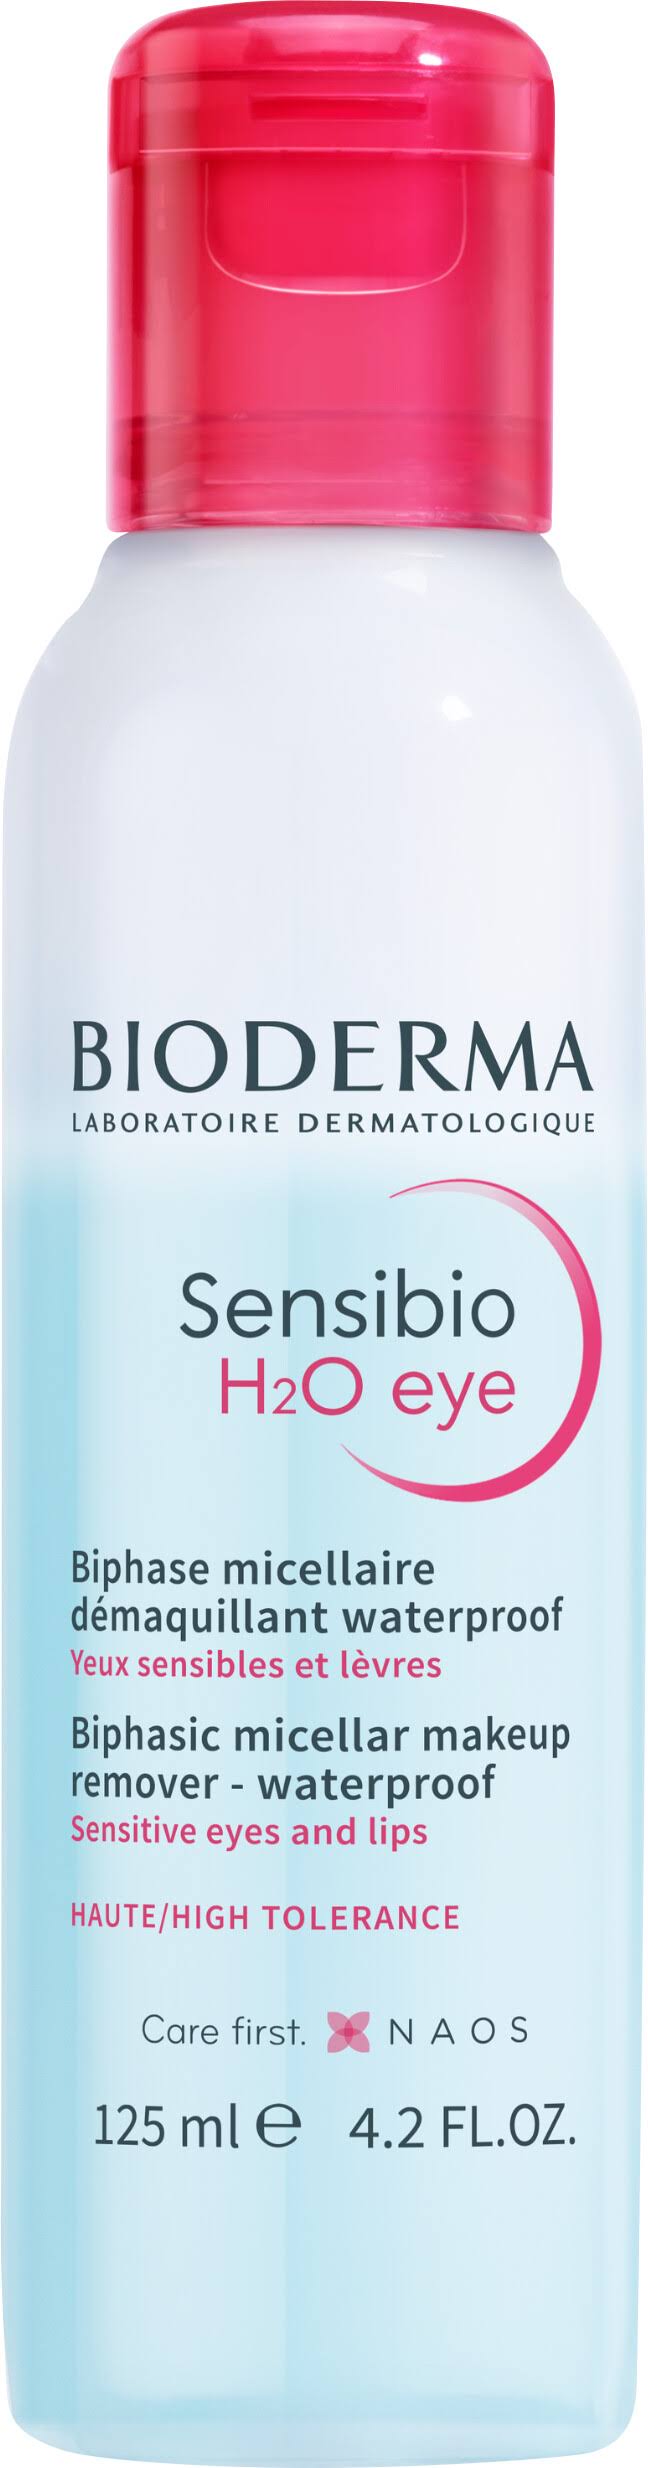 Bioderma Sensibio H2O eye 125.0 mL